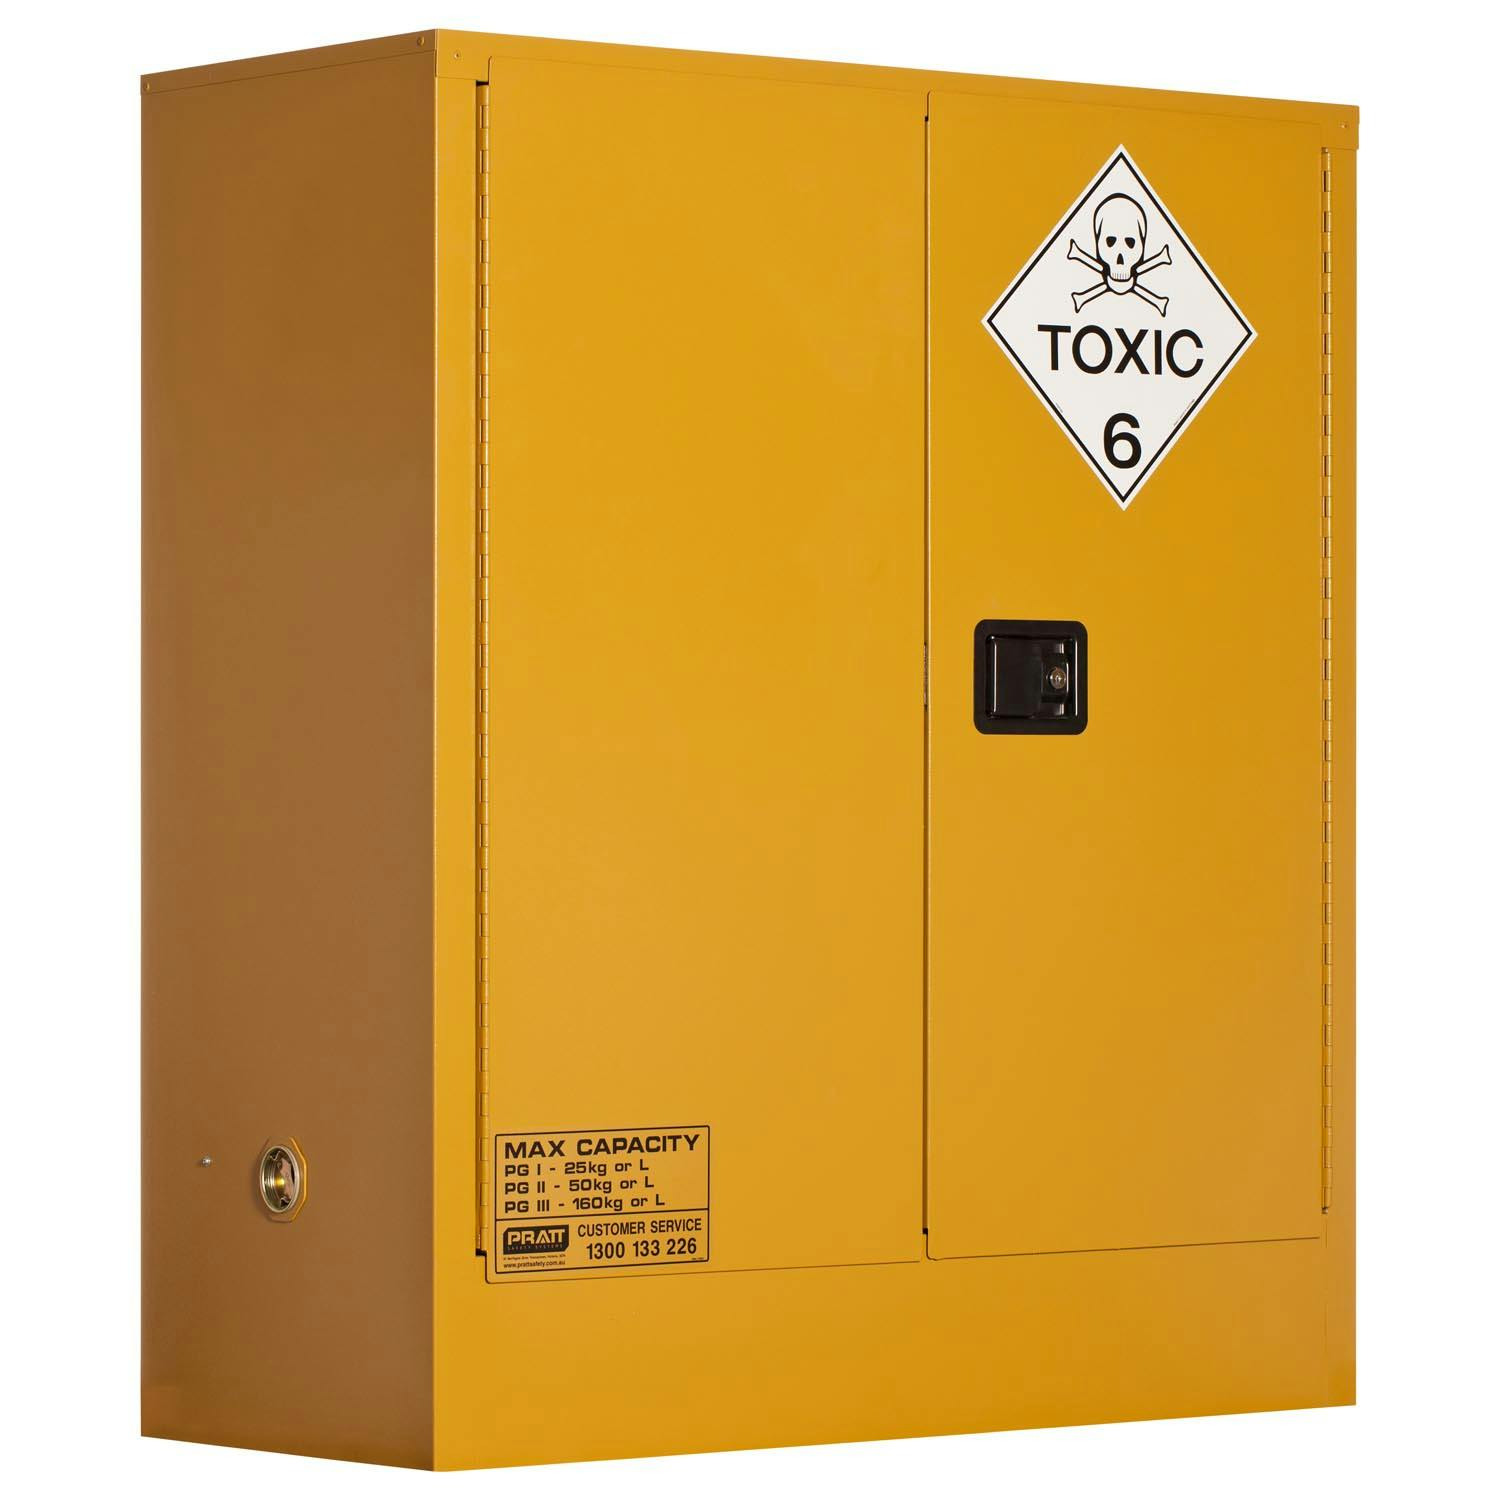 Pratt Toxic Substance Storage Cabinet: 160L - 2 Doors - 2 Shelves